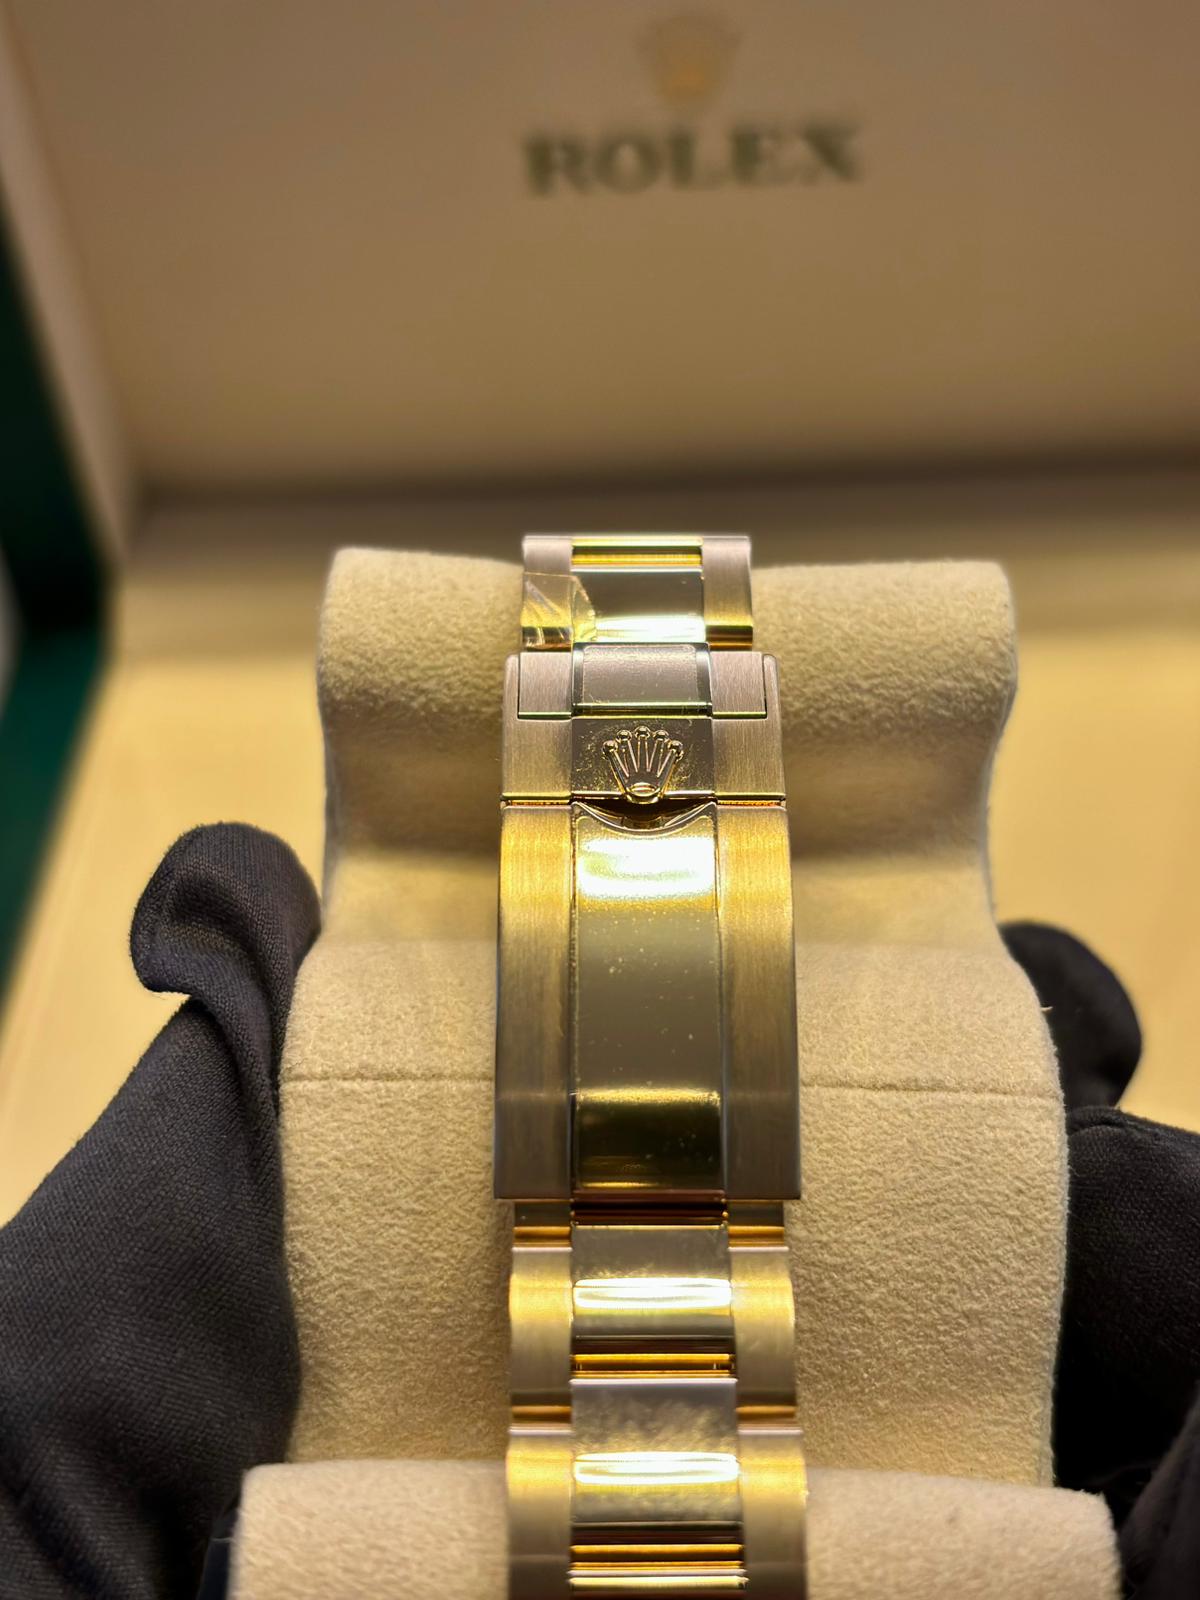 Rolex Cosmograph Daytona 18K Yellow Gold Men's Watch